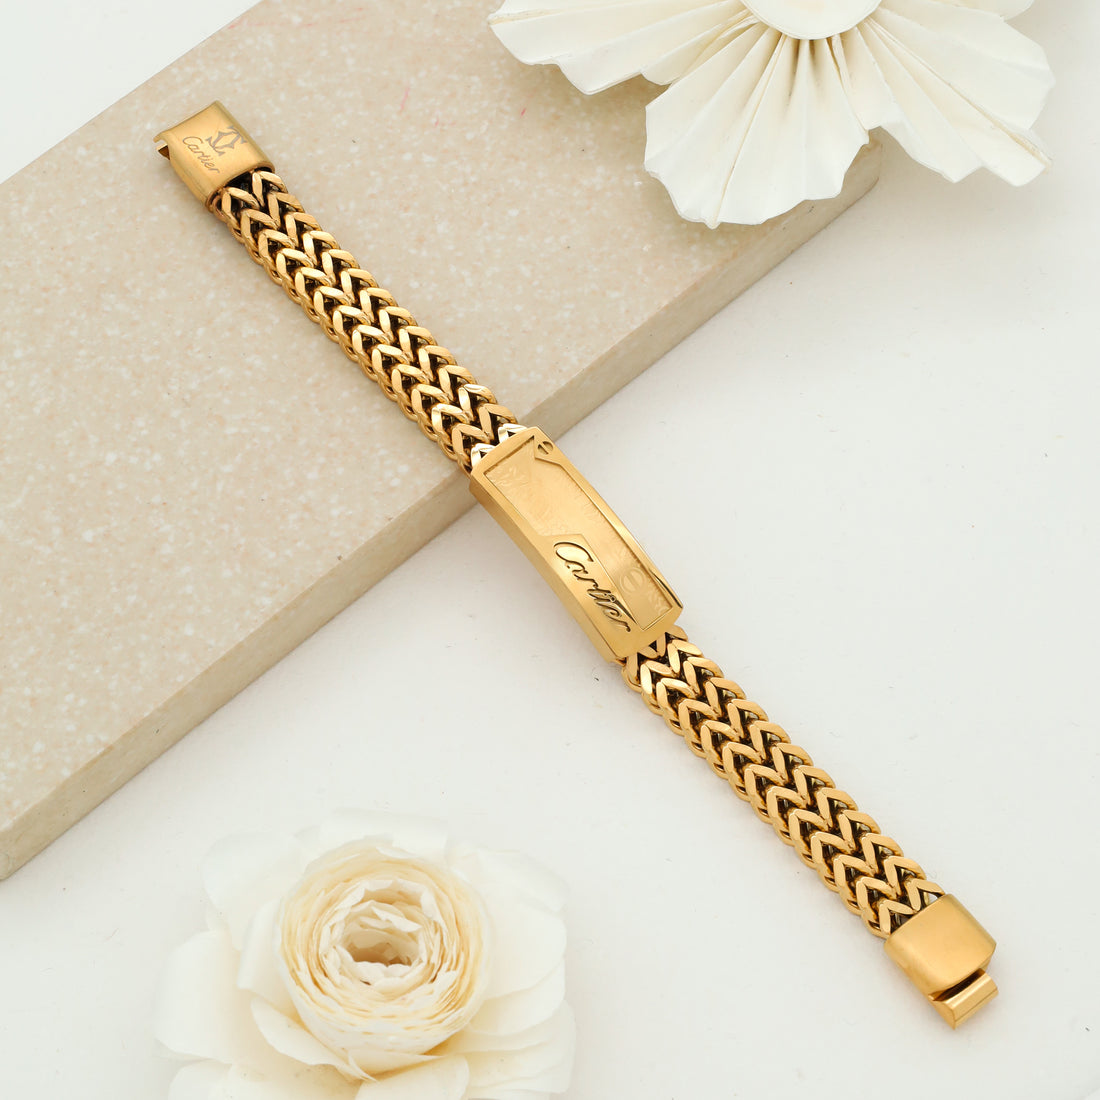 Zancan rose gold bracelet with diamonds.